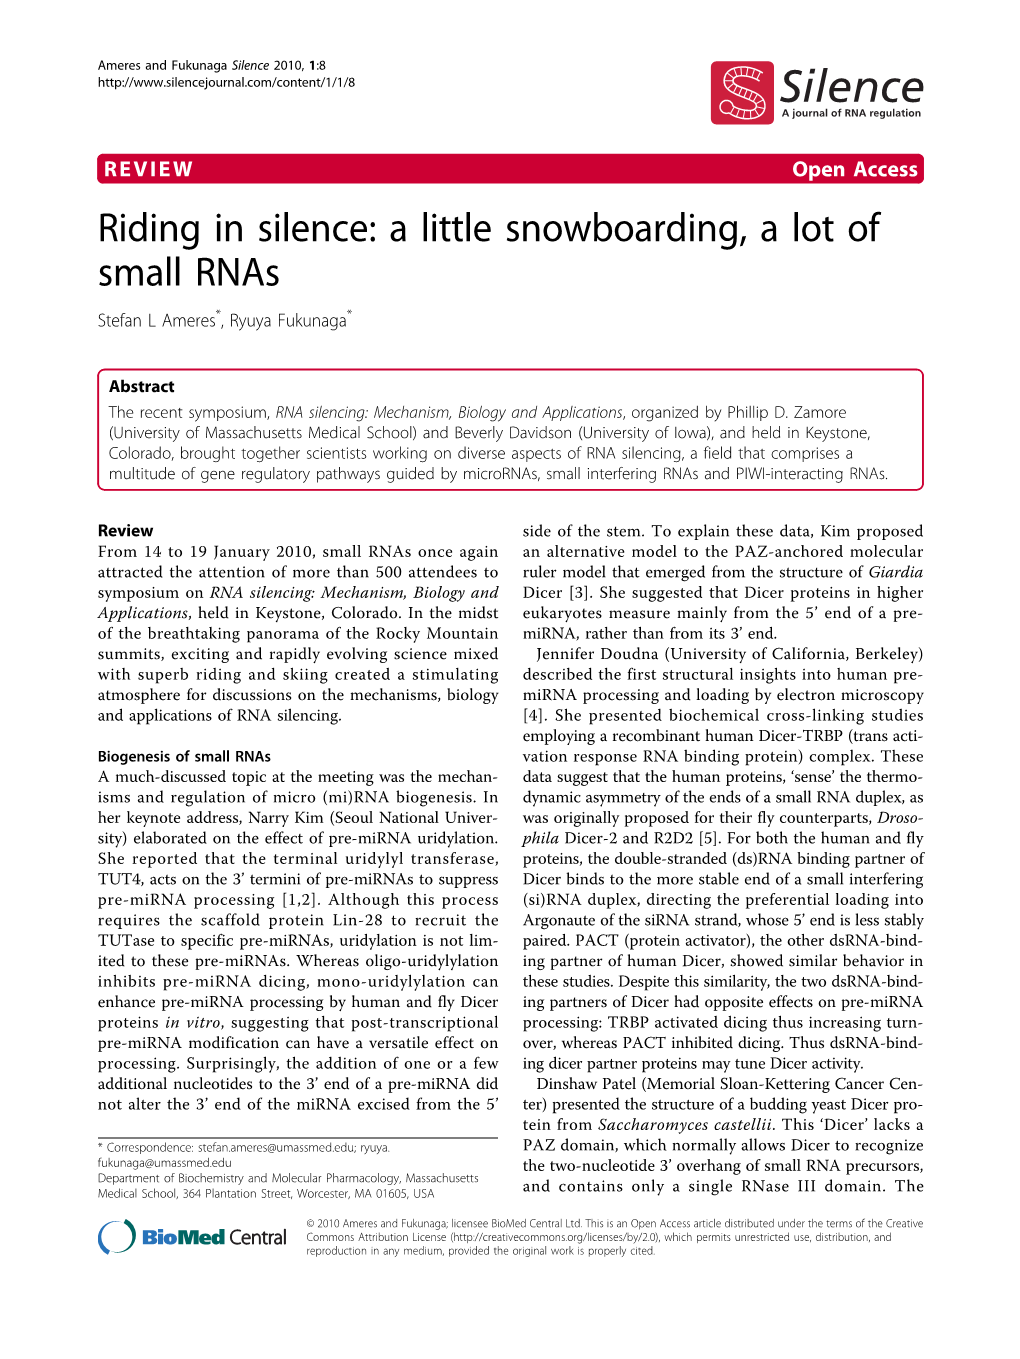 Riding in Silence: a Little Snowboarding, a Lot of Small Rnas Stefan L Ameres*, Ryuya Fukunaga*